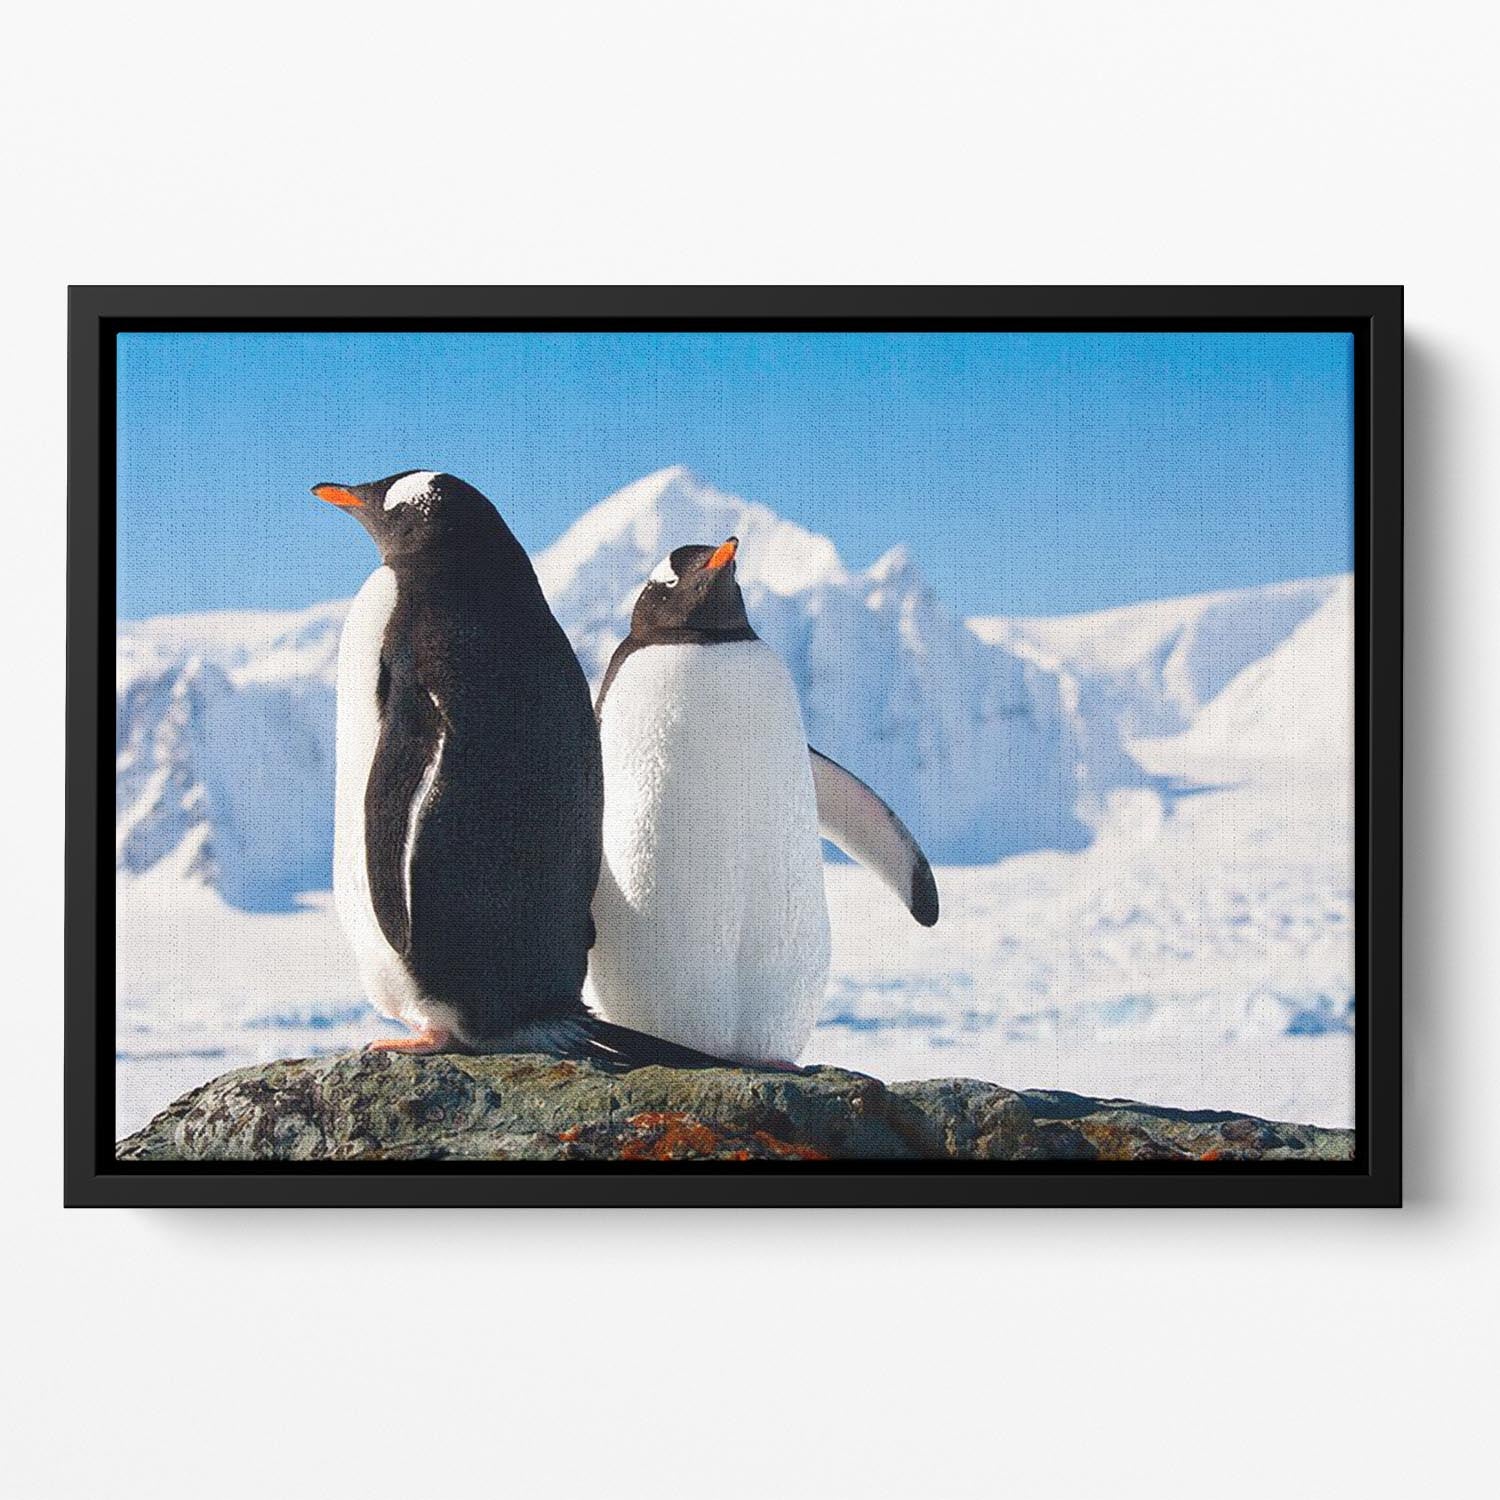 Two penguins dreaming together sitting on a rock Floating Framed Canvas - Canvas Art Rocks - 2